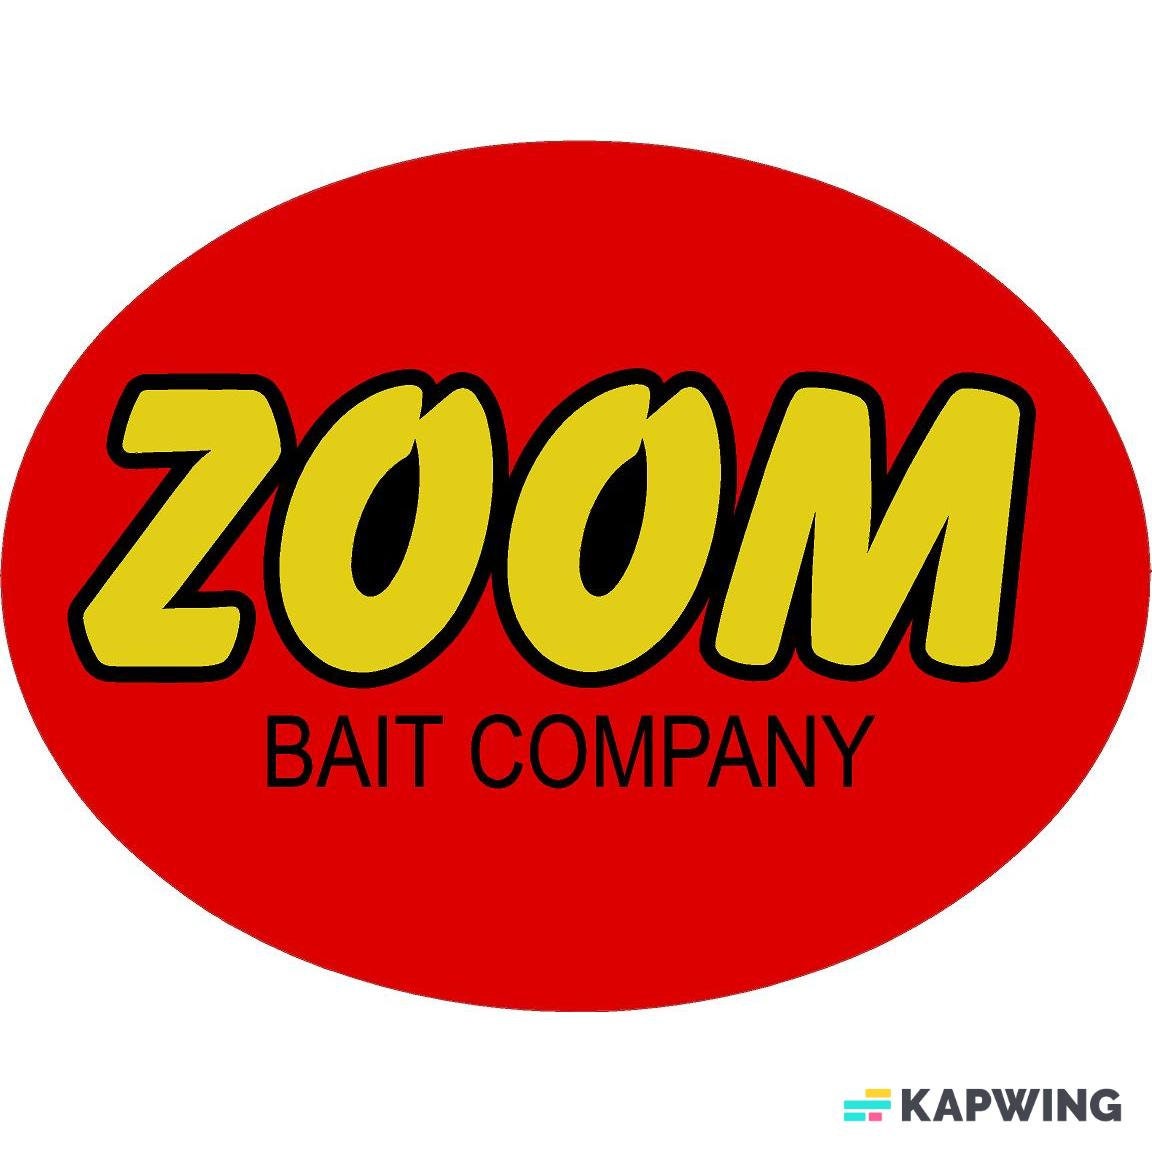 Zoom Bait Company Professional Boat Carpet Graphics Marine Decals 